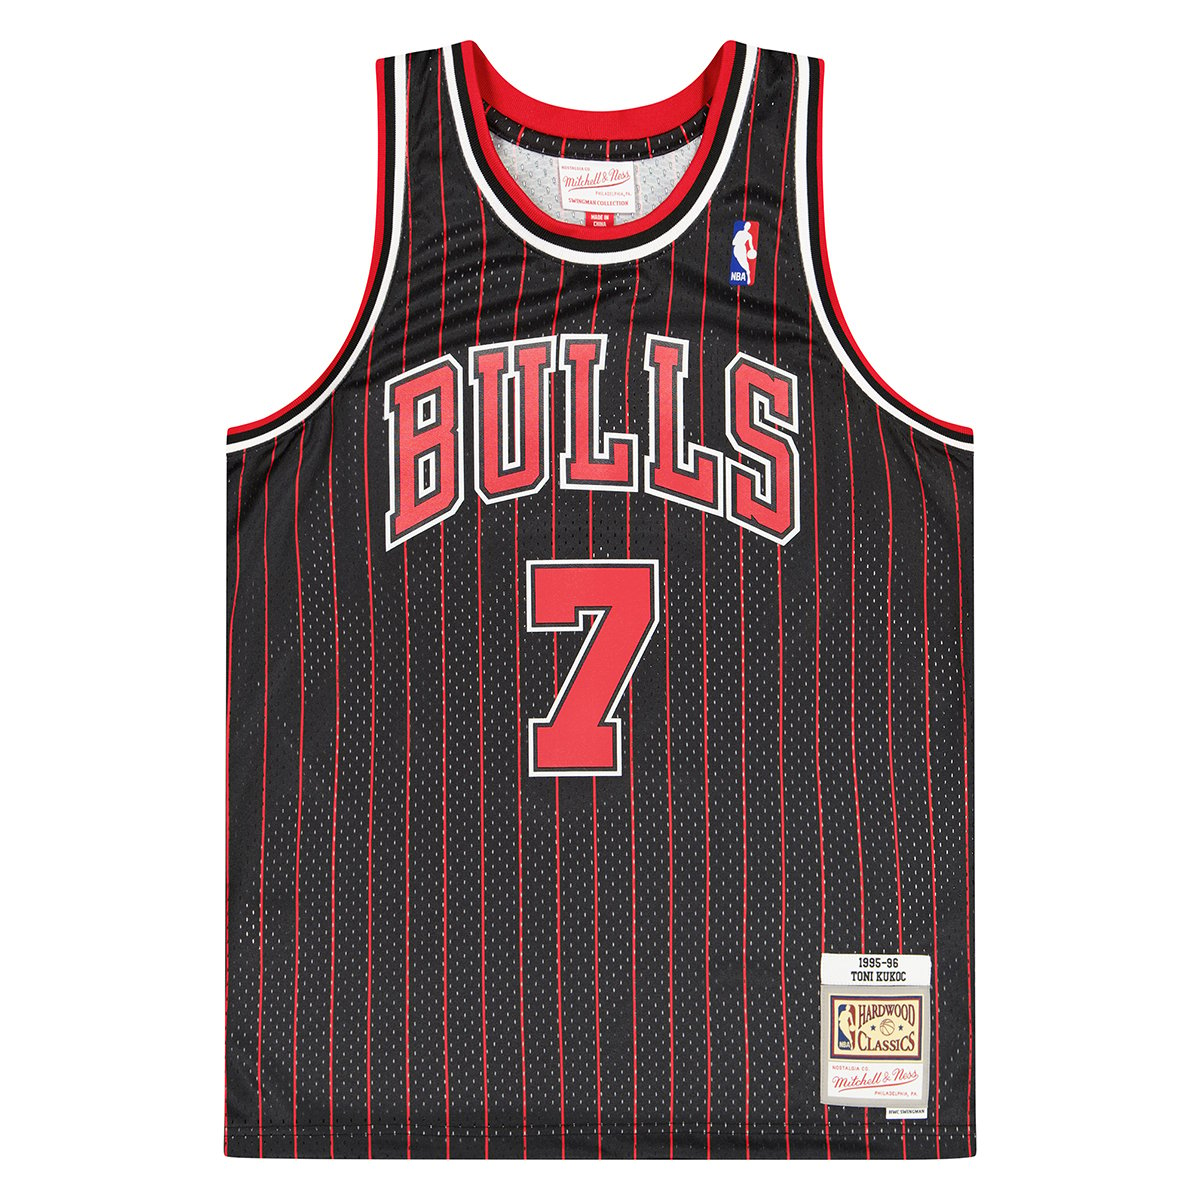 Buy NBA SWINGMAN JERSEY BULLS 95-96 TONI KUKOC for 114.95-124.95 on KICKZ.com!